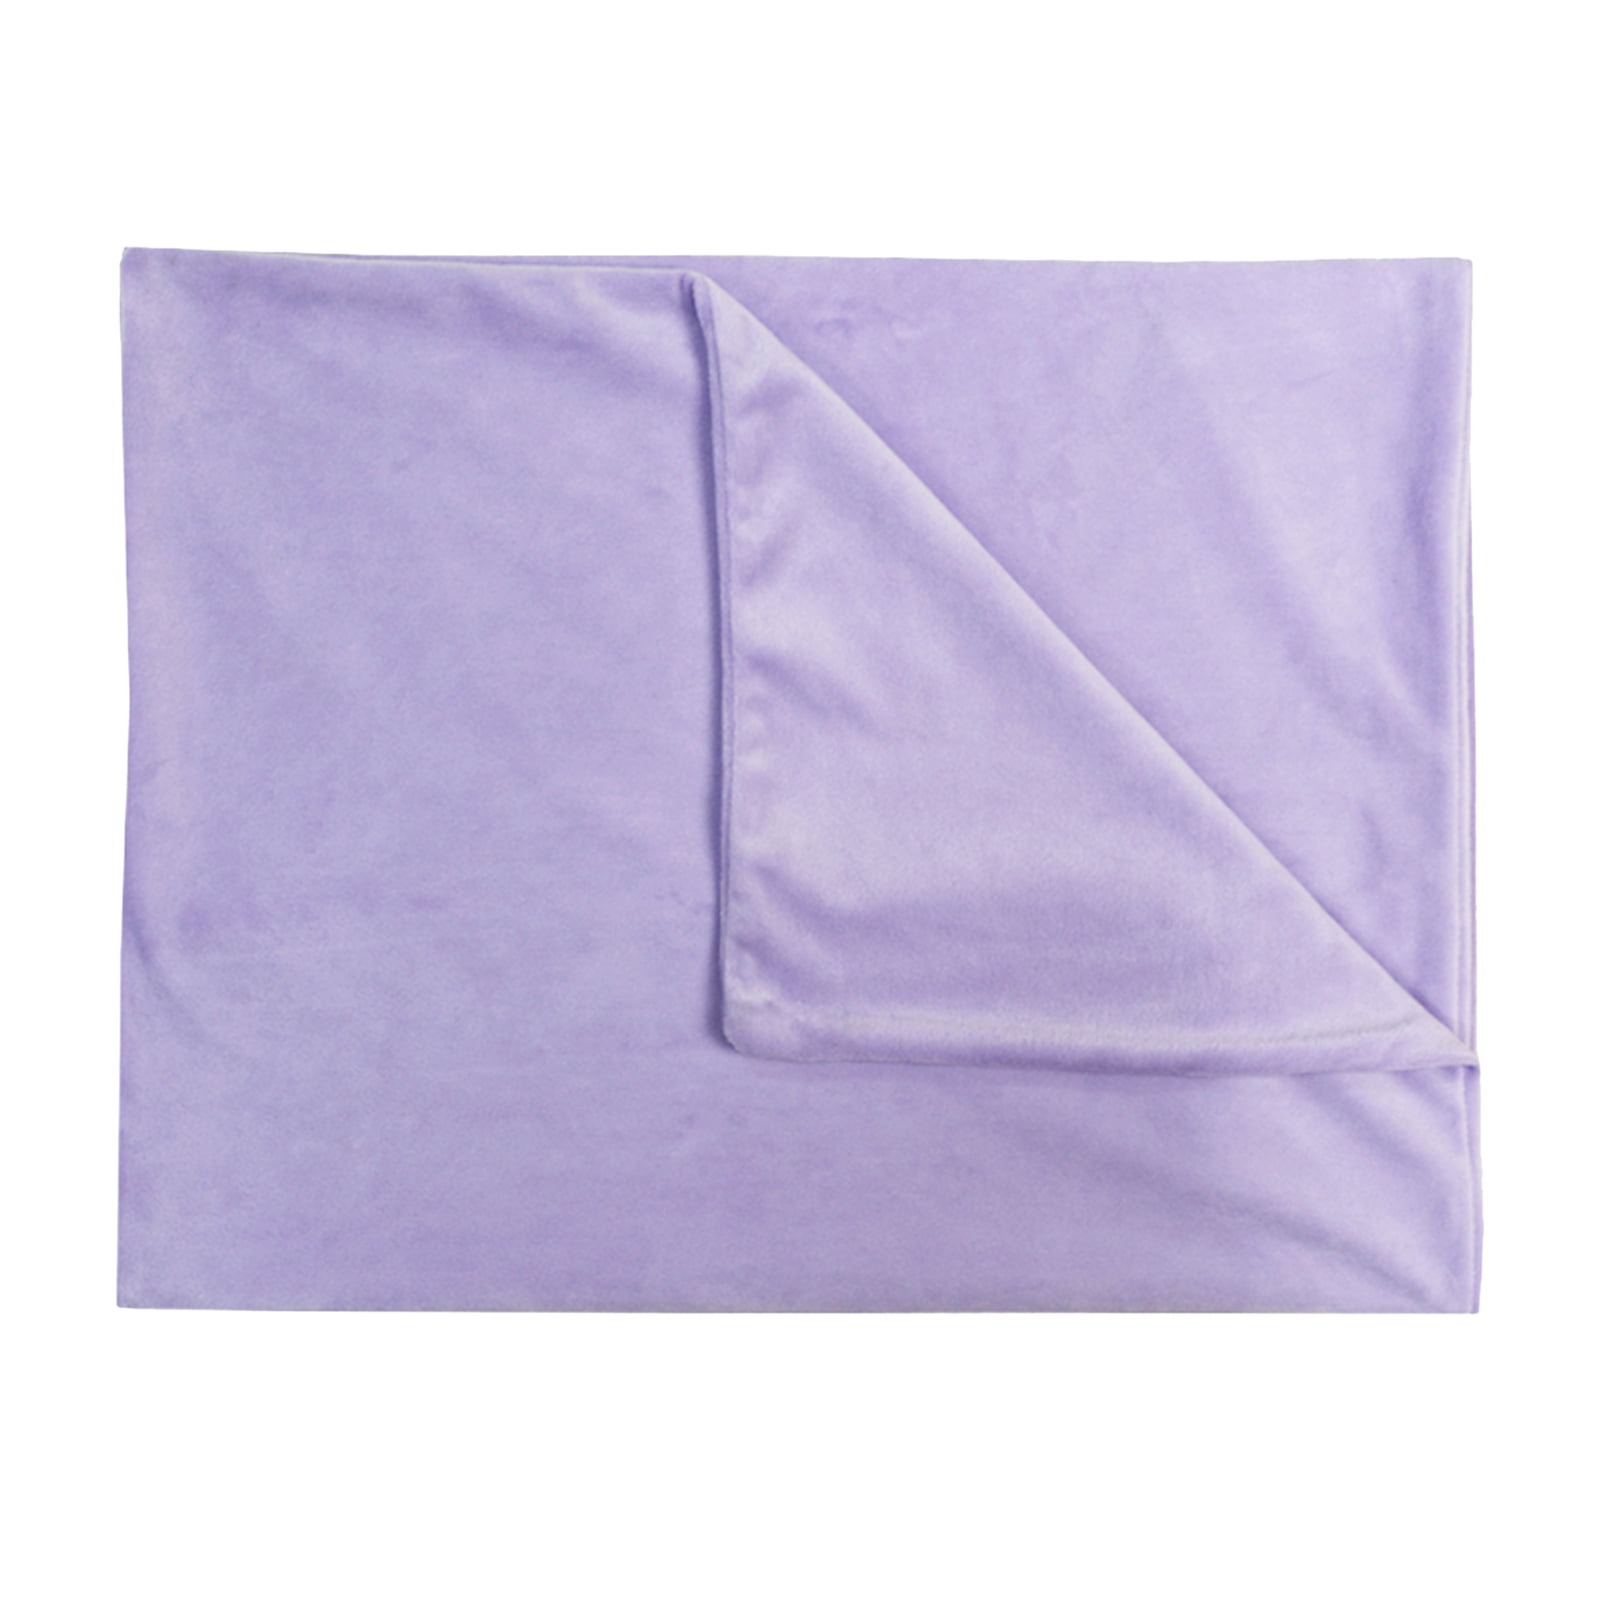 New Bolster Pillow Cover Nursing Pregnancy Orthopedic Body Support Case All SIZE 